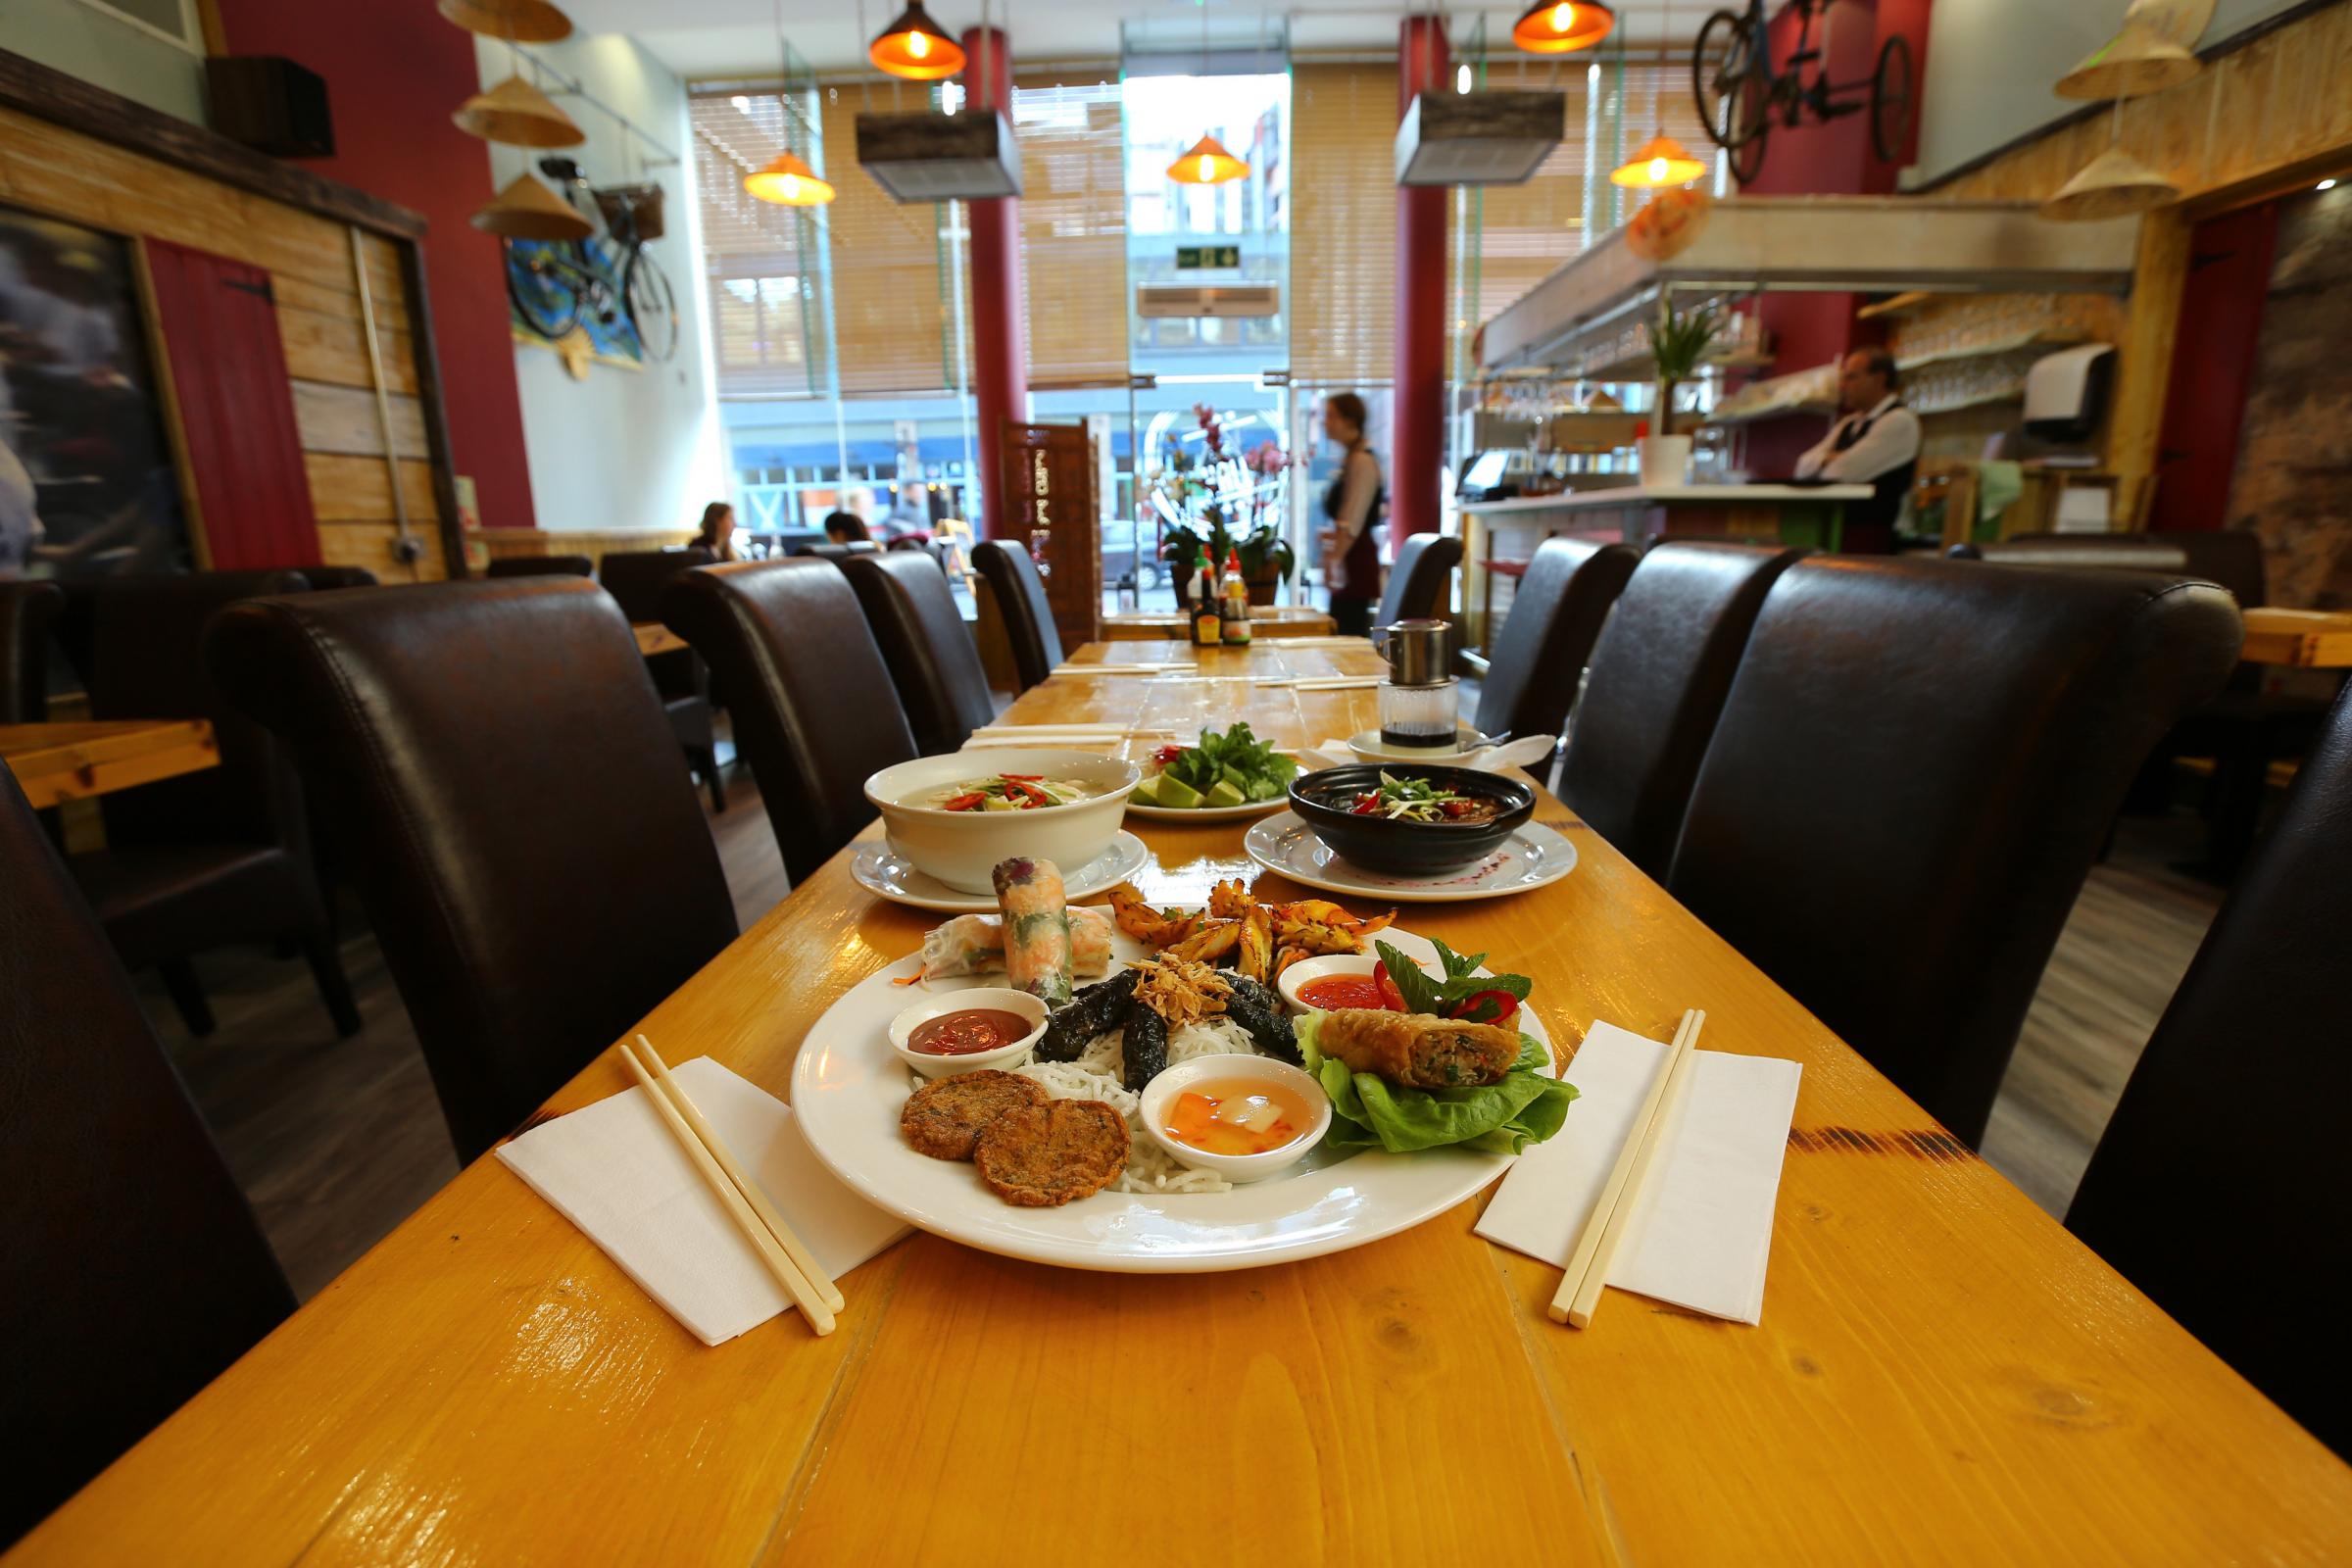 The China Sea Restaurant